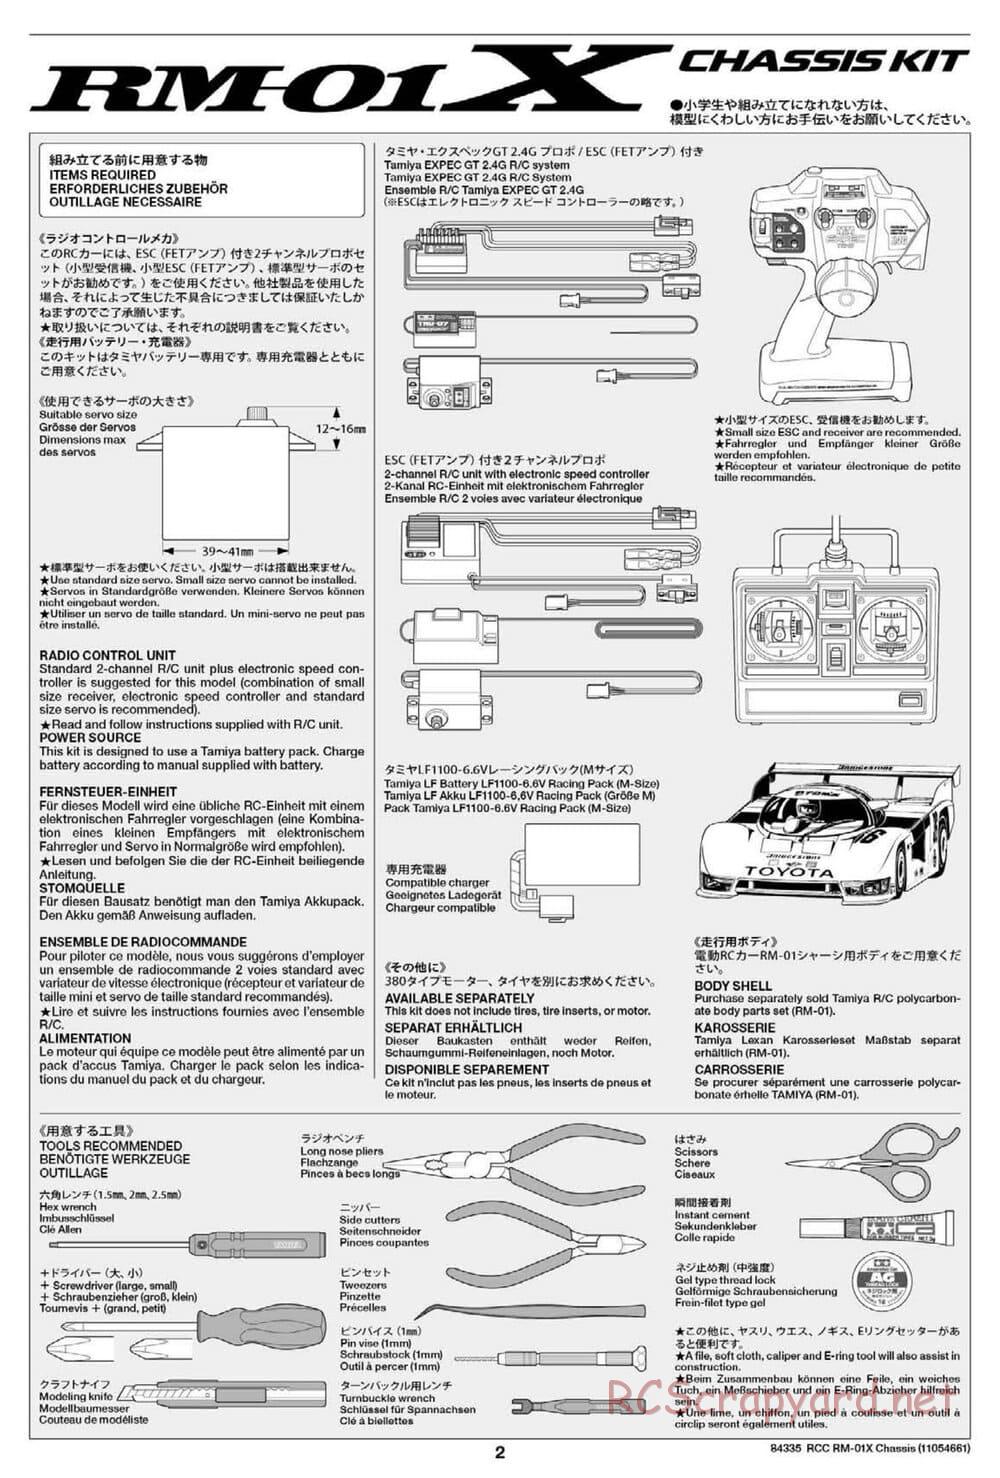 Tamiya - RM-01X Chassis - Manual - Page 2